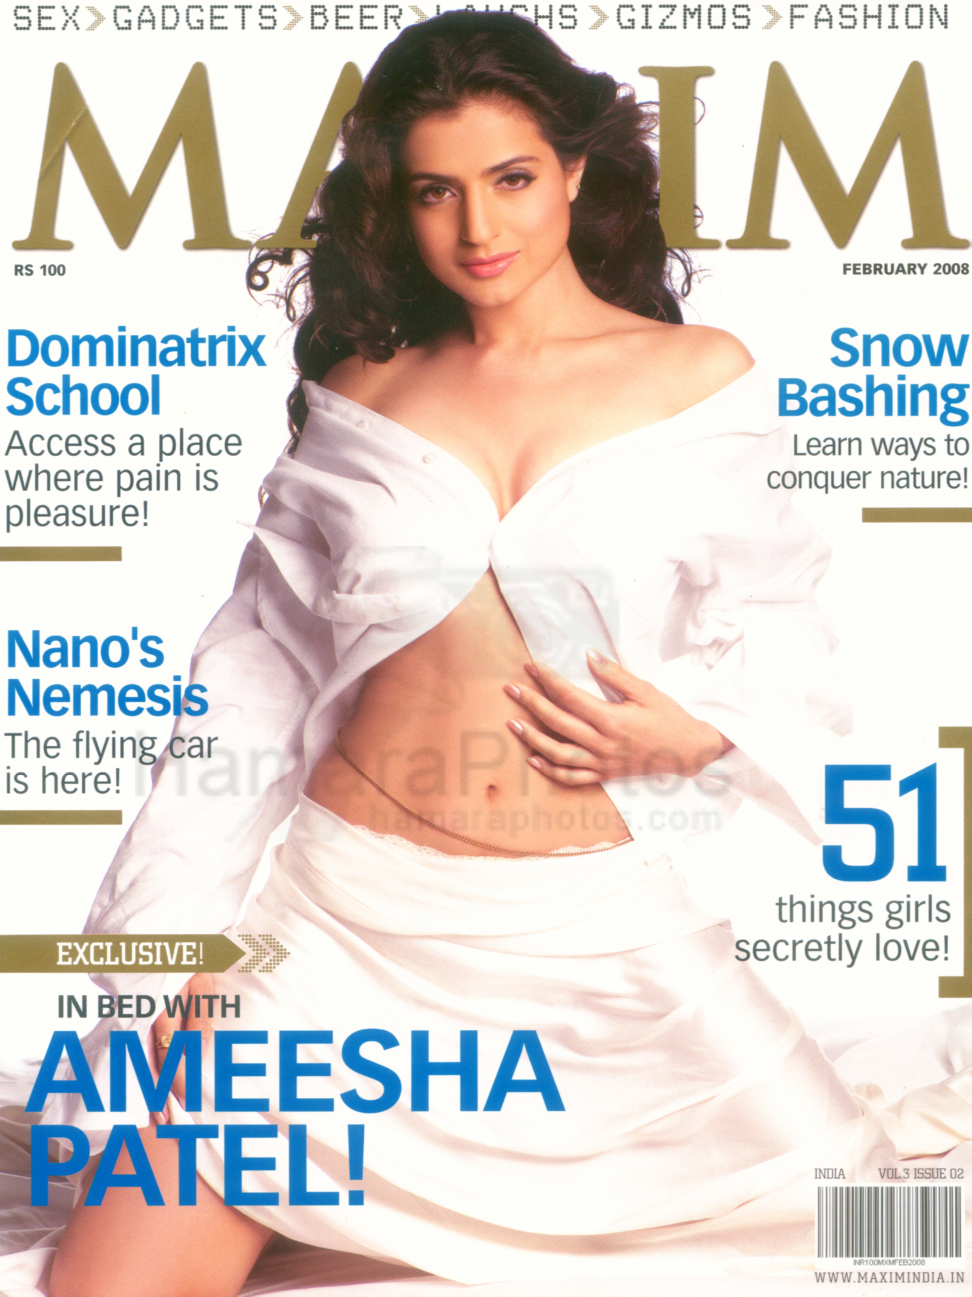 Amisha Patel Feb 08 Maxim Scans 